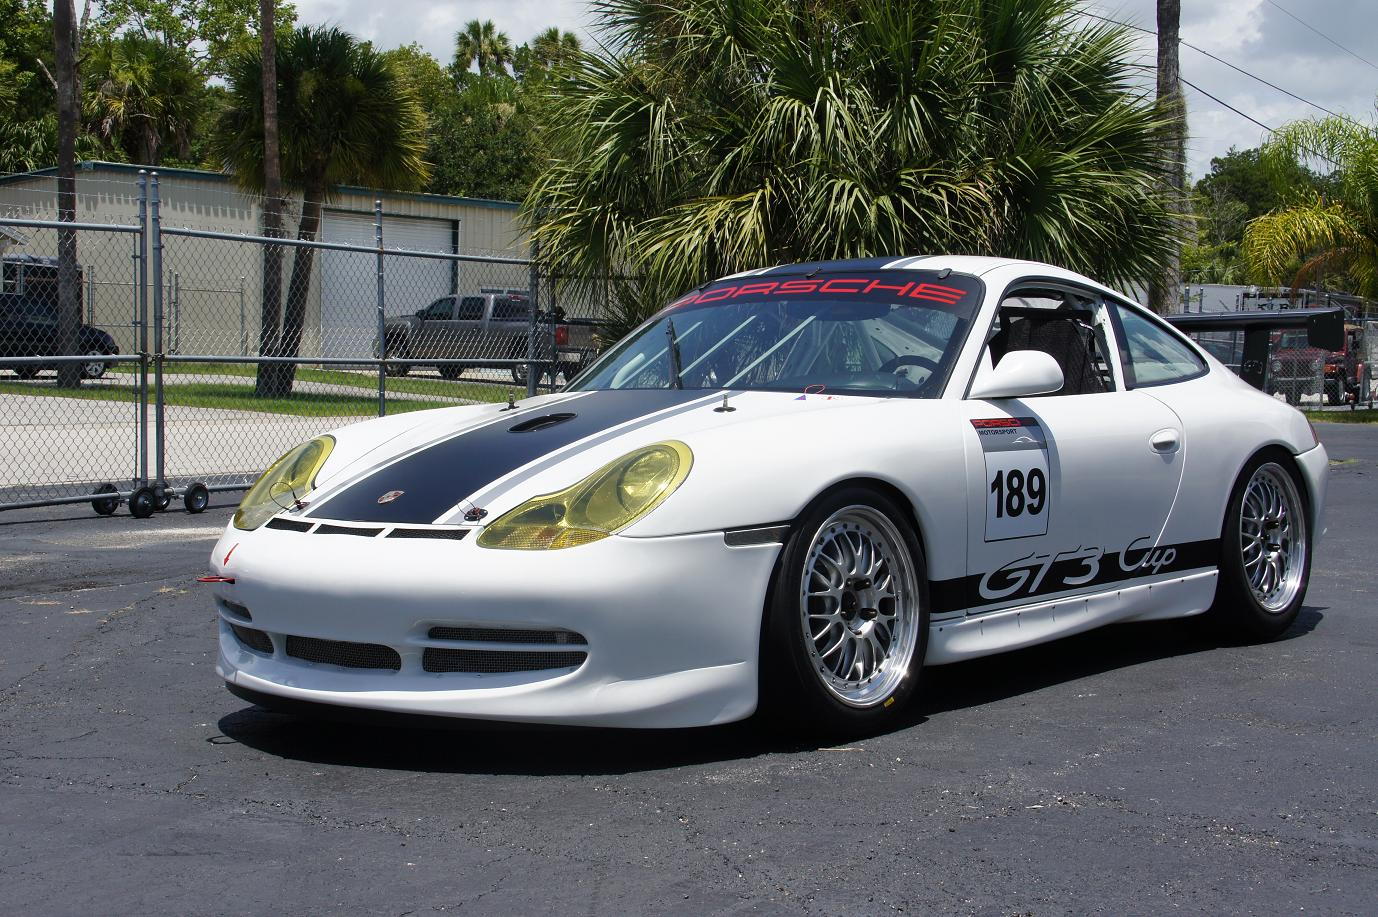 2001 Porsche GT3 - 2001 996 GT3 Cup fully restored - Used - VIN 12345678901234567 - Daytona Beach, FL 32117, United States